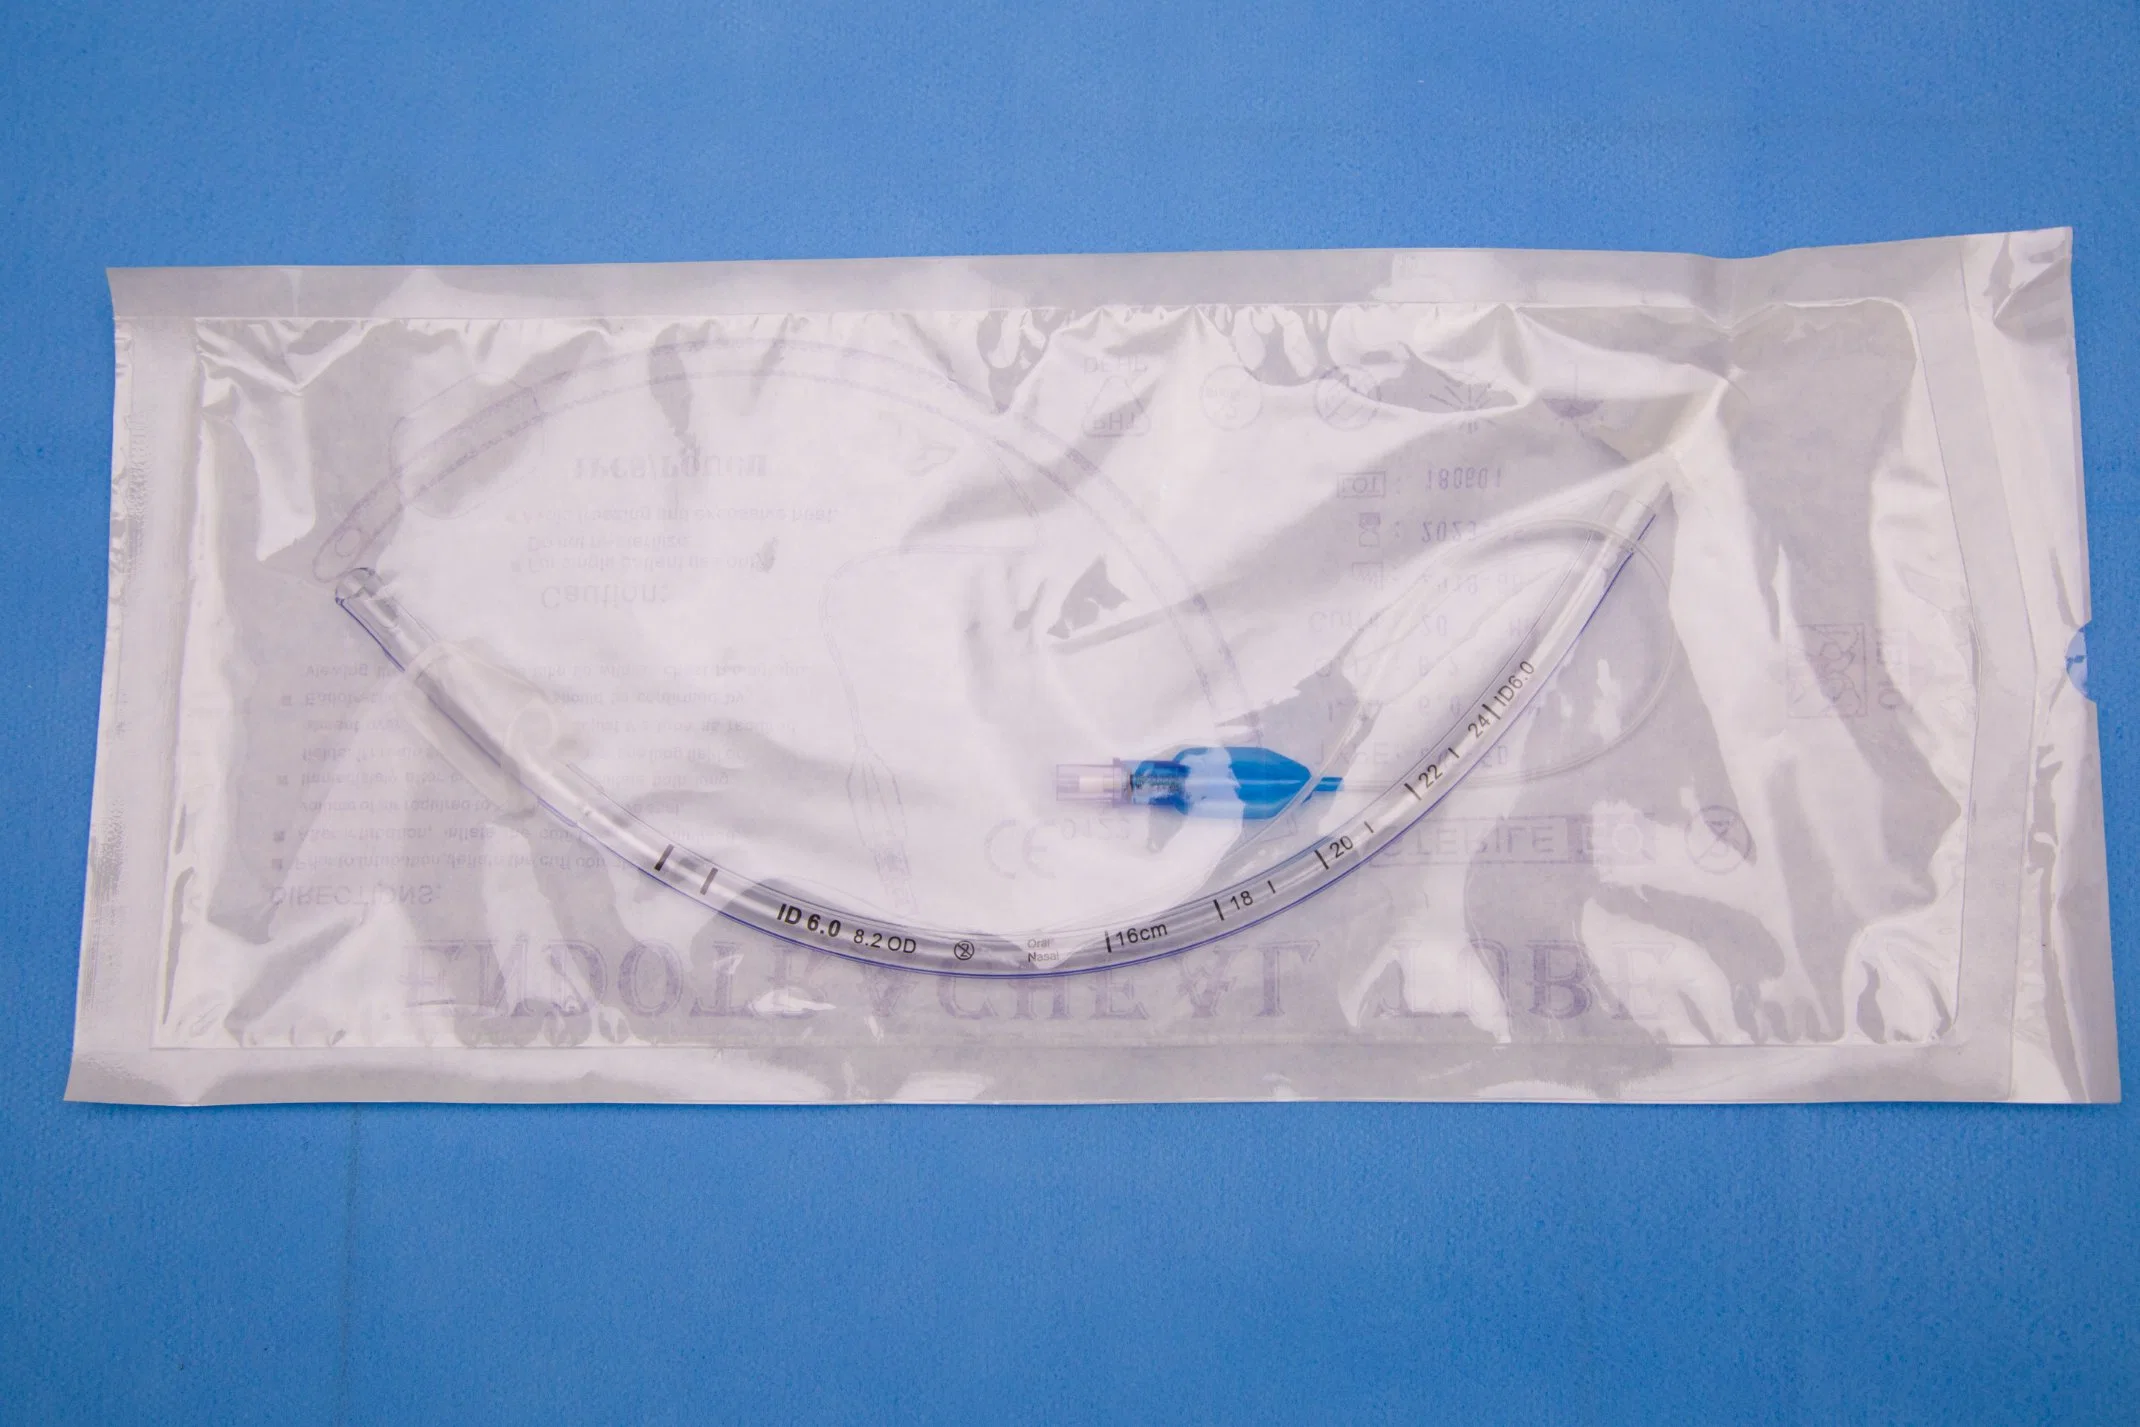 20PCS/Box Plastic Carton Single Packed Medical Disposable Sterile Hot Sale Endotracheal